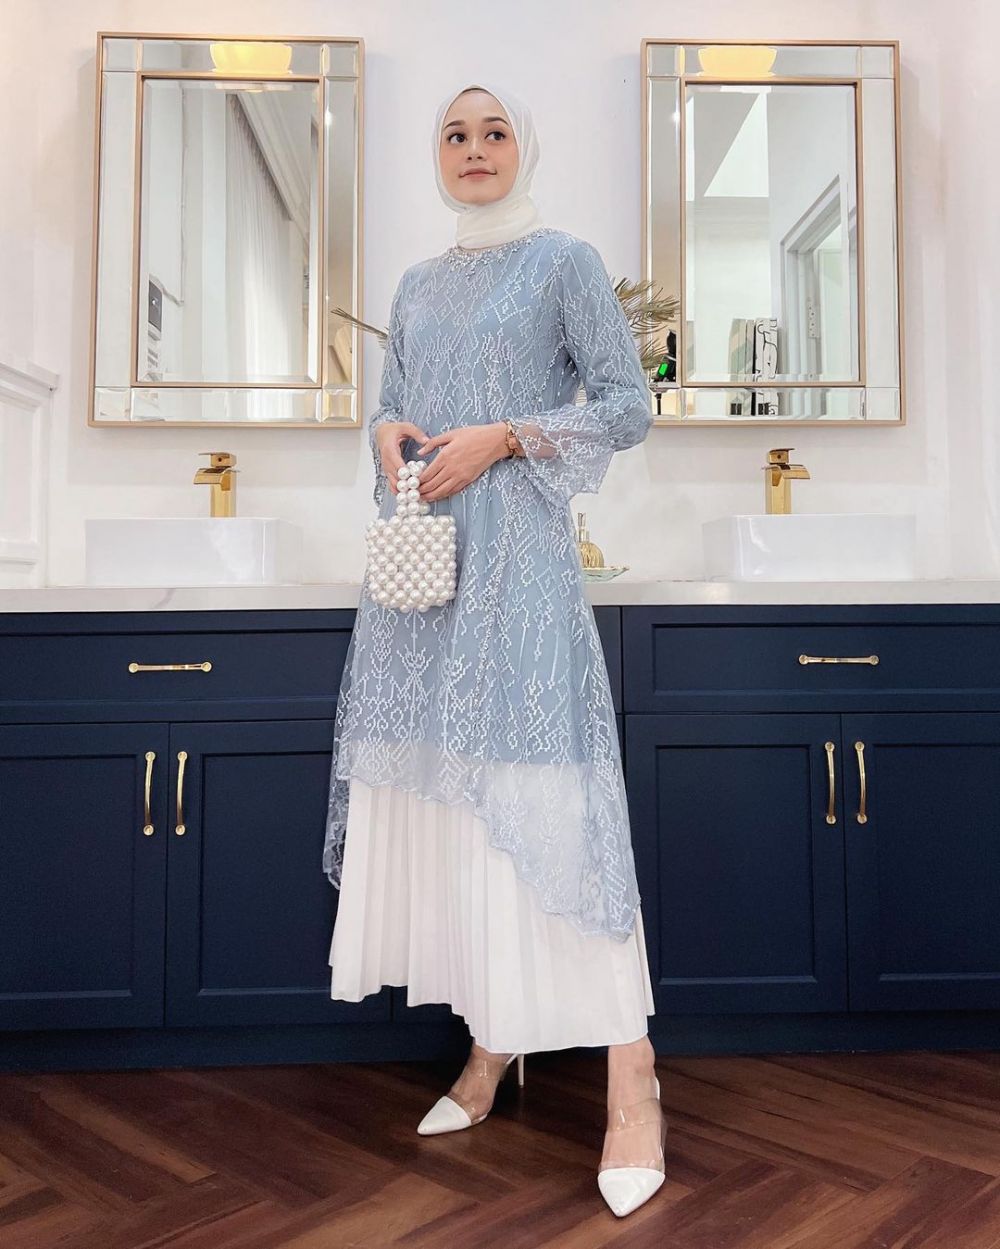 9 Inspirasi Outfit Pendamping Wisuda Ala Nazlia Rahma